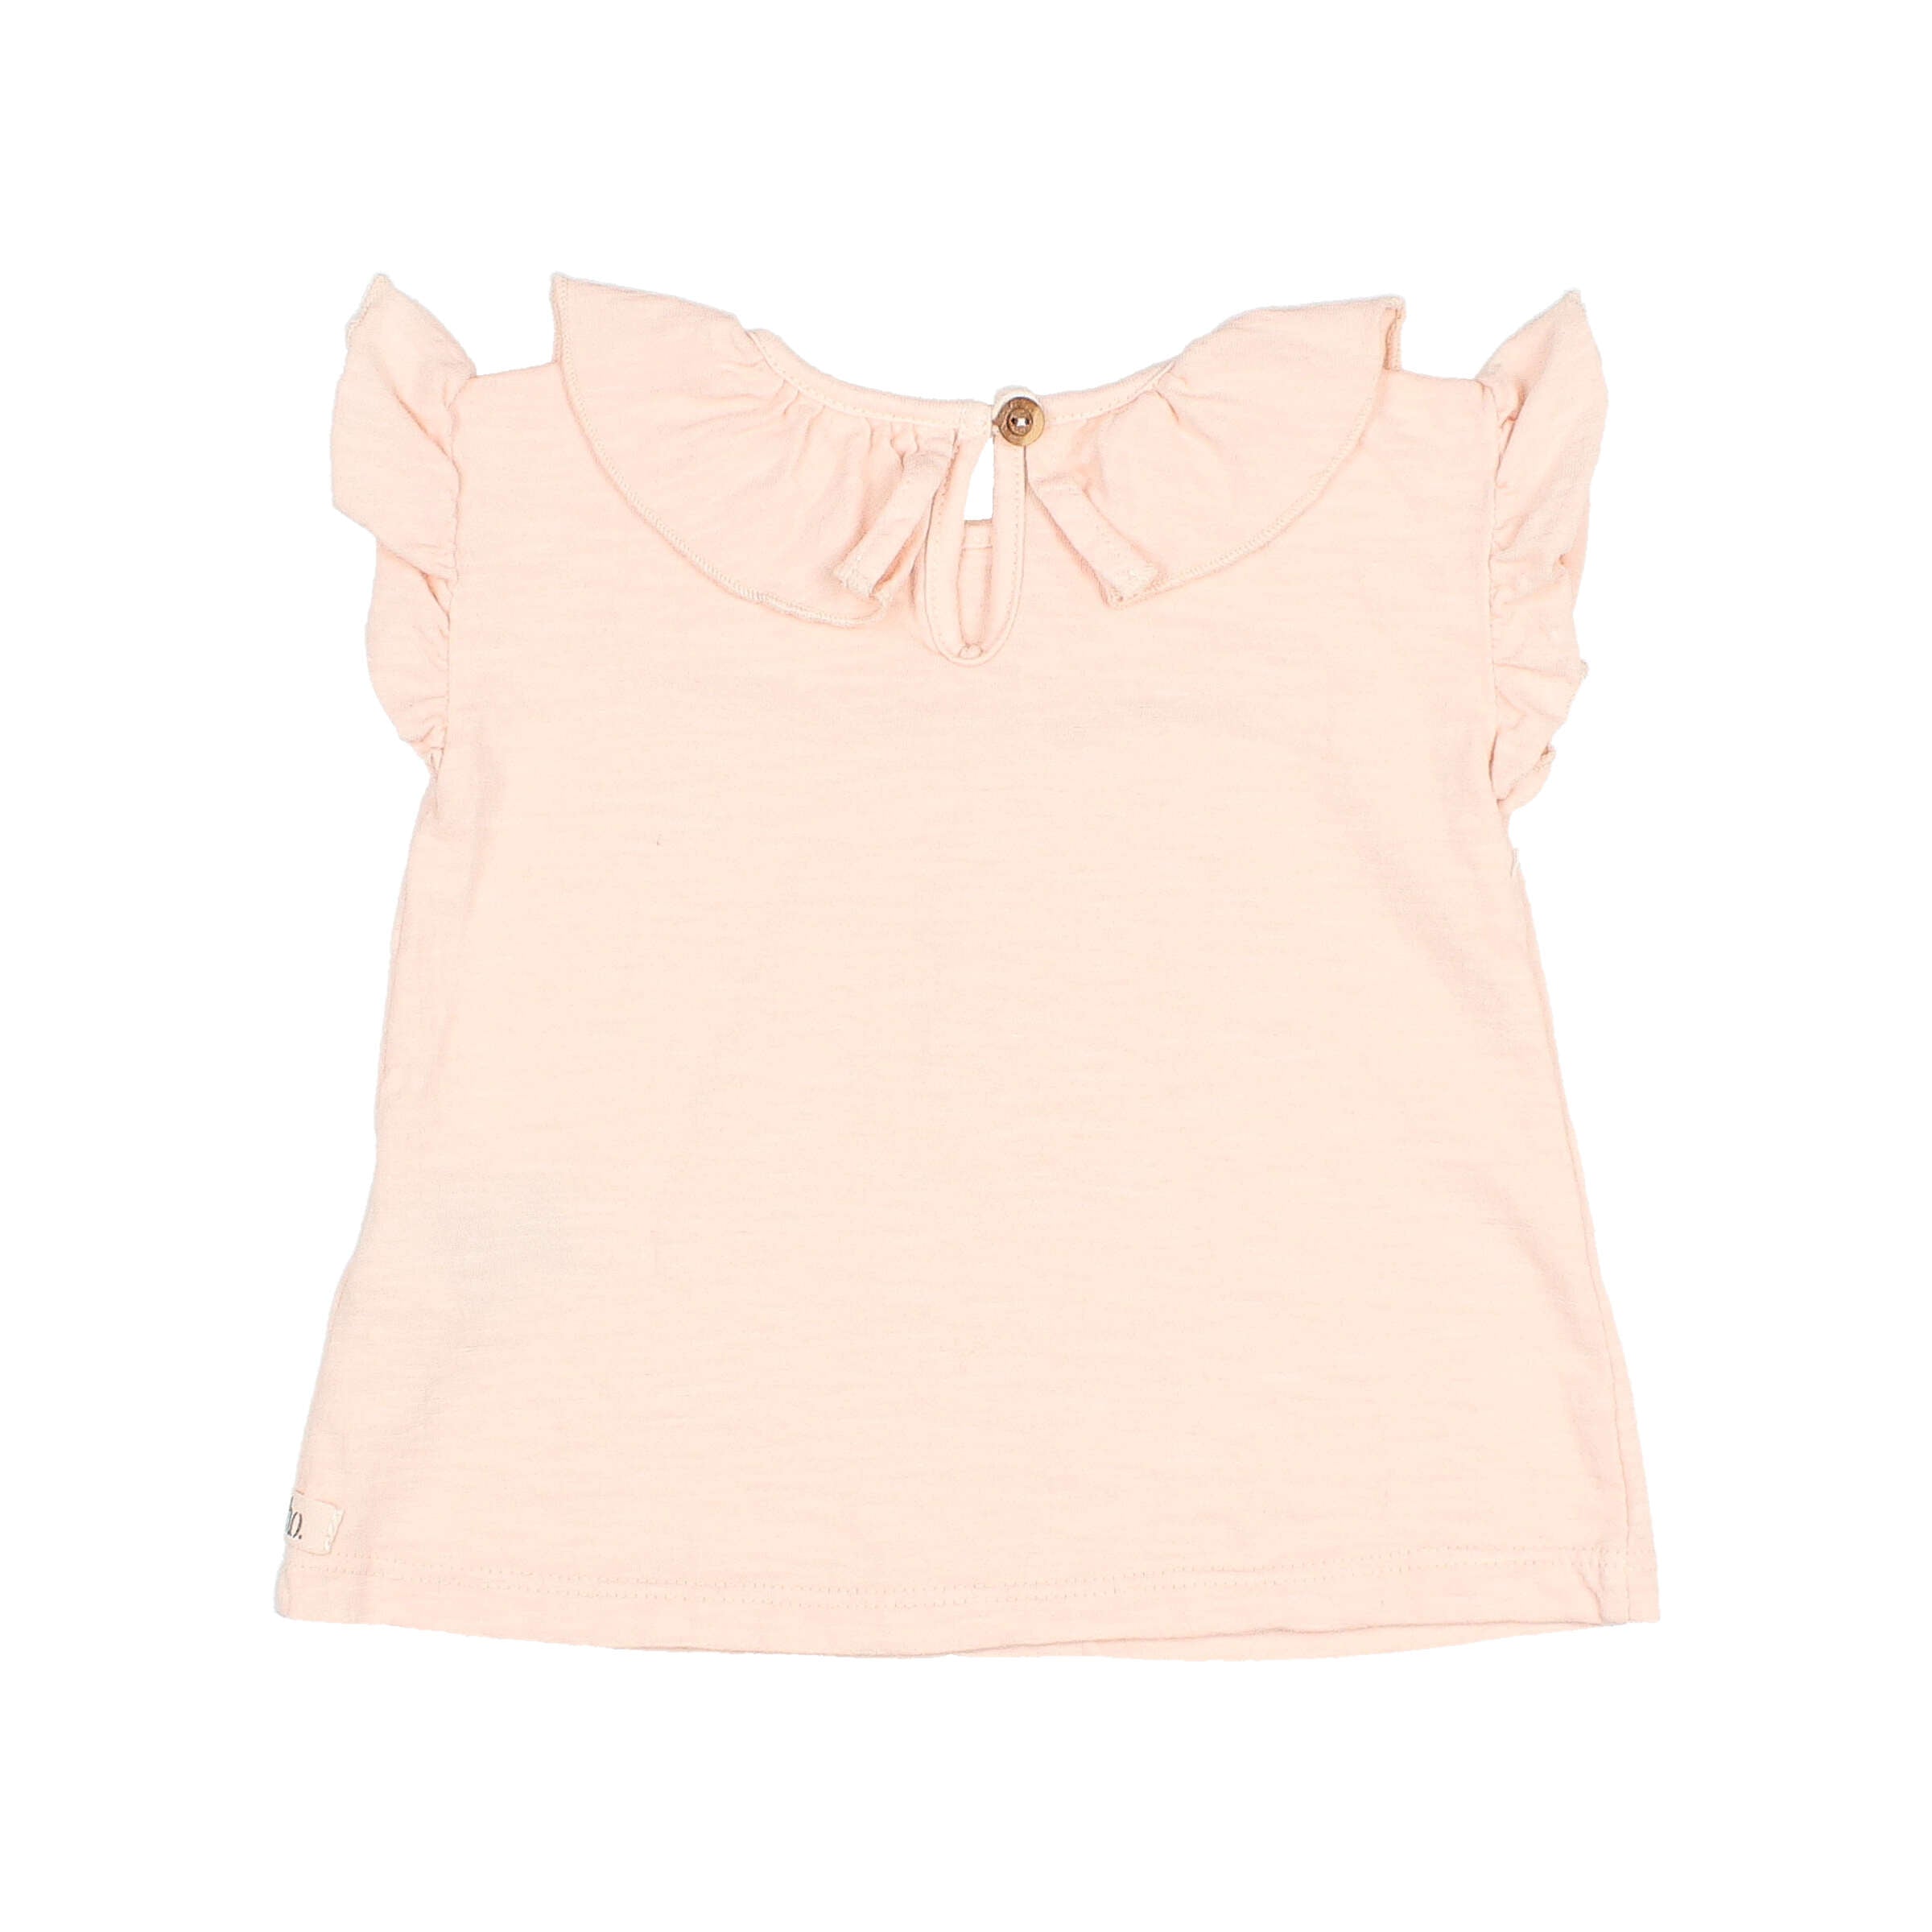 Buho - bb - frill collar t-shirt - light pink